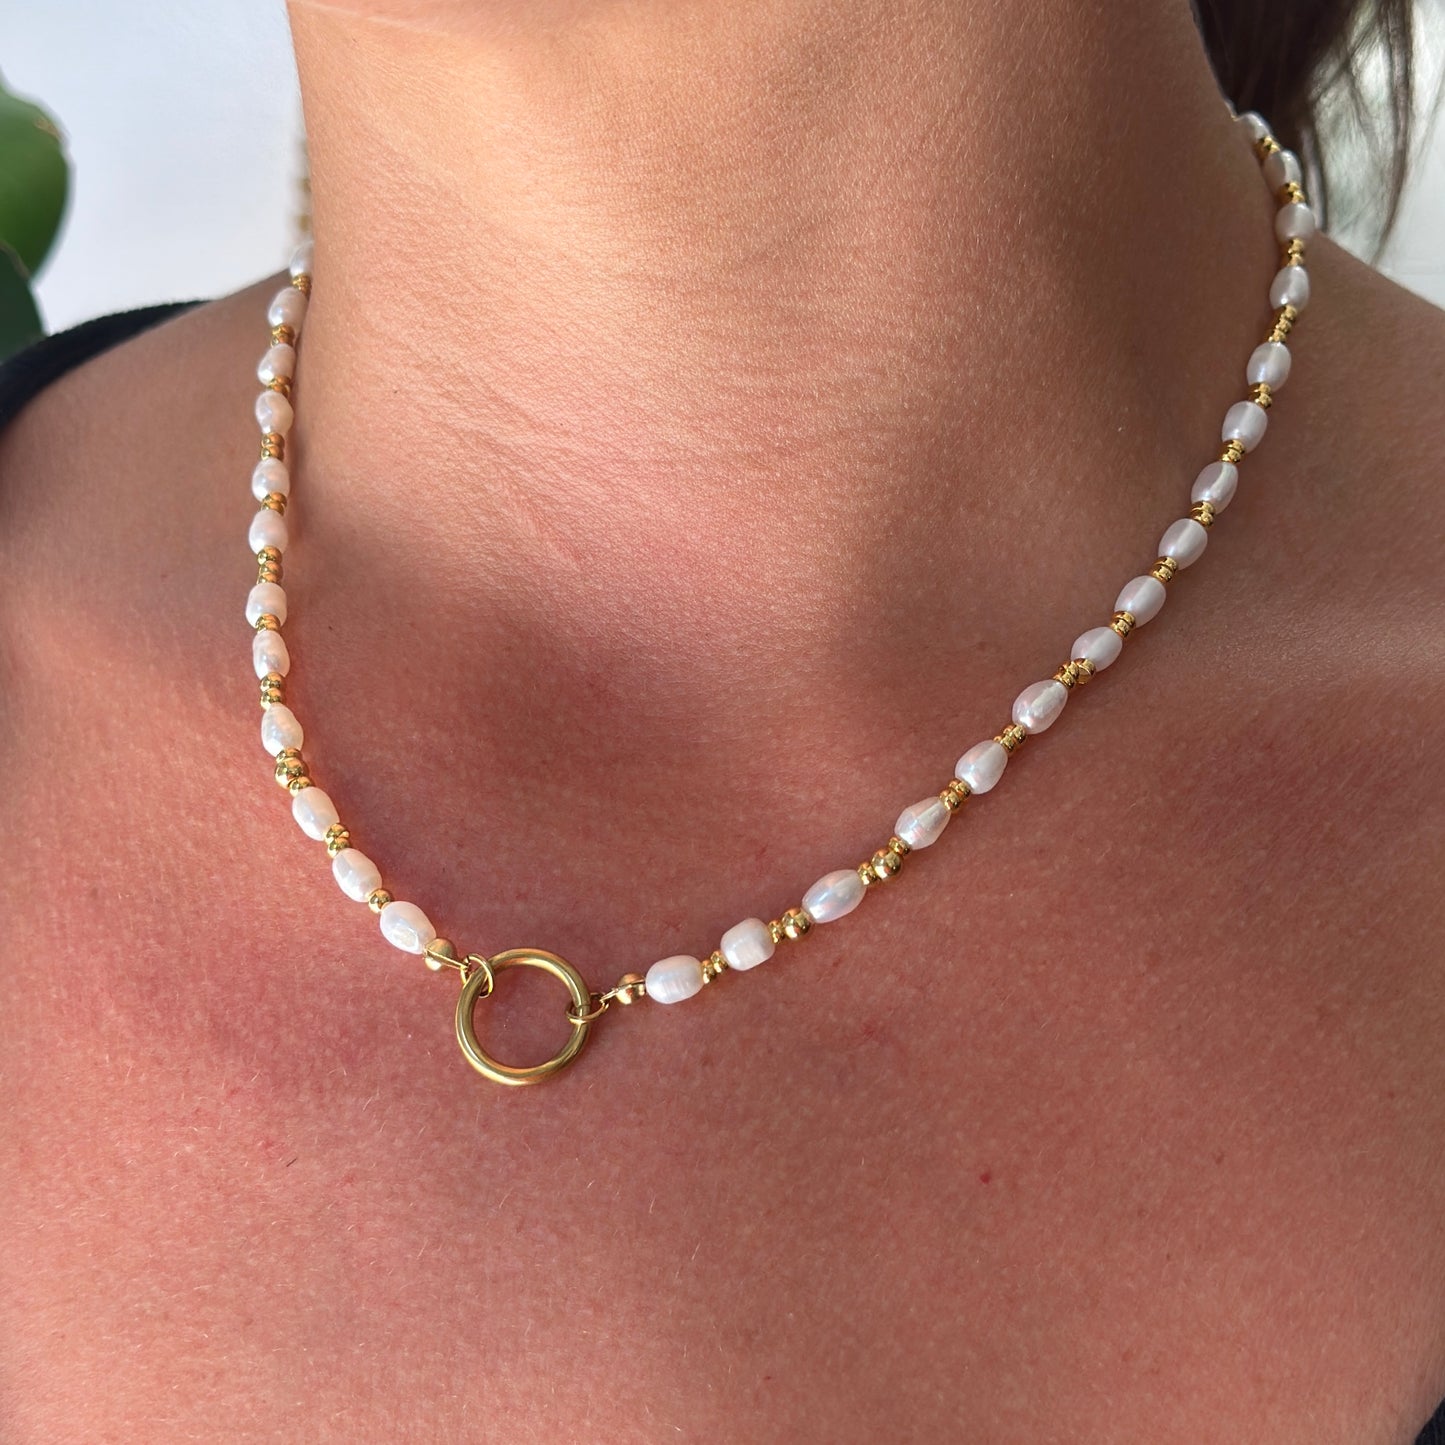 Handmade Golden Pearl necklace